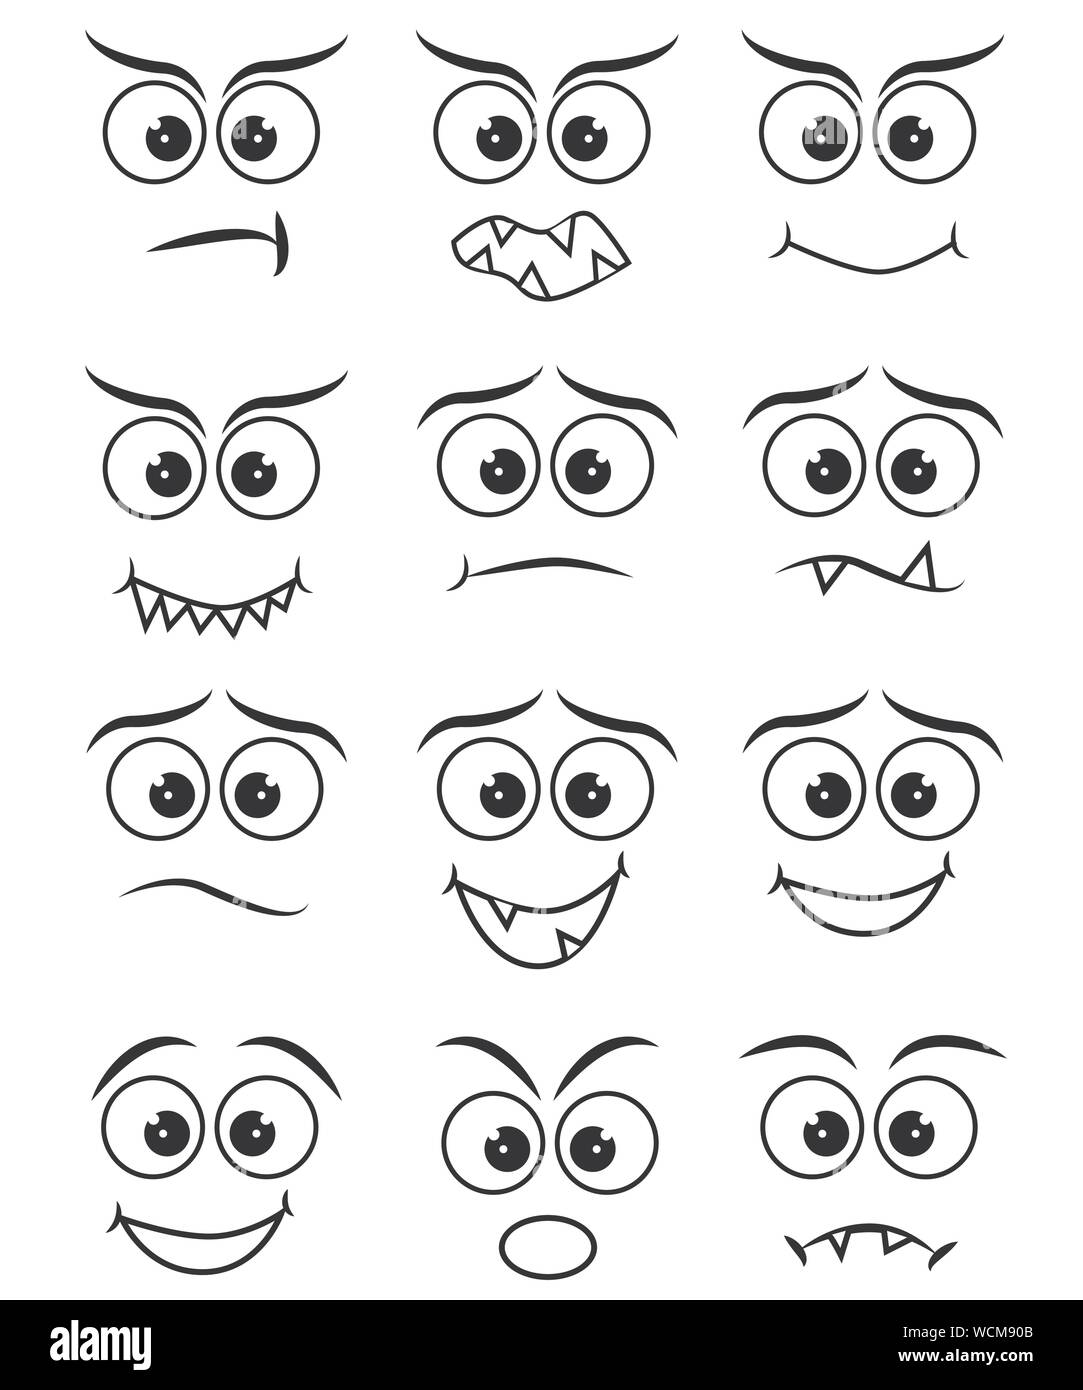 Cartoon Faces Expression Line Icons Set Set Of Emoticons Or Emoji Illustration Line Icons Smile Icons Line Art Isolated Illustration On White Backgr Stock Vector Image Art Alamy